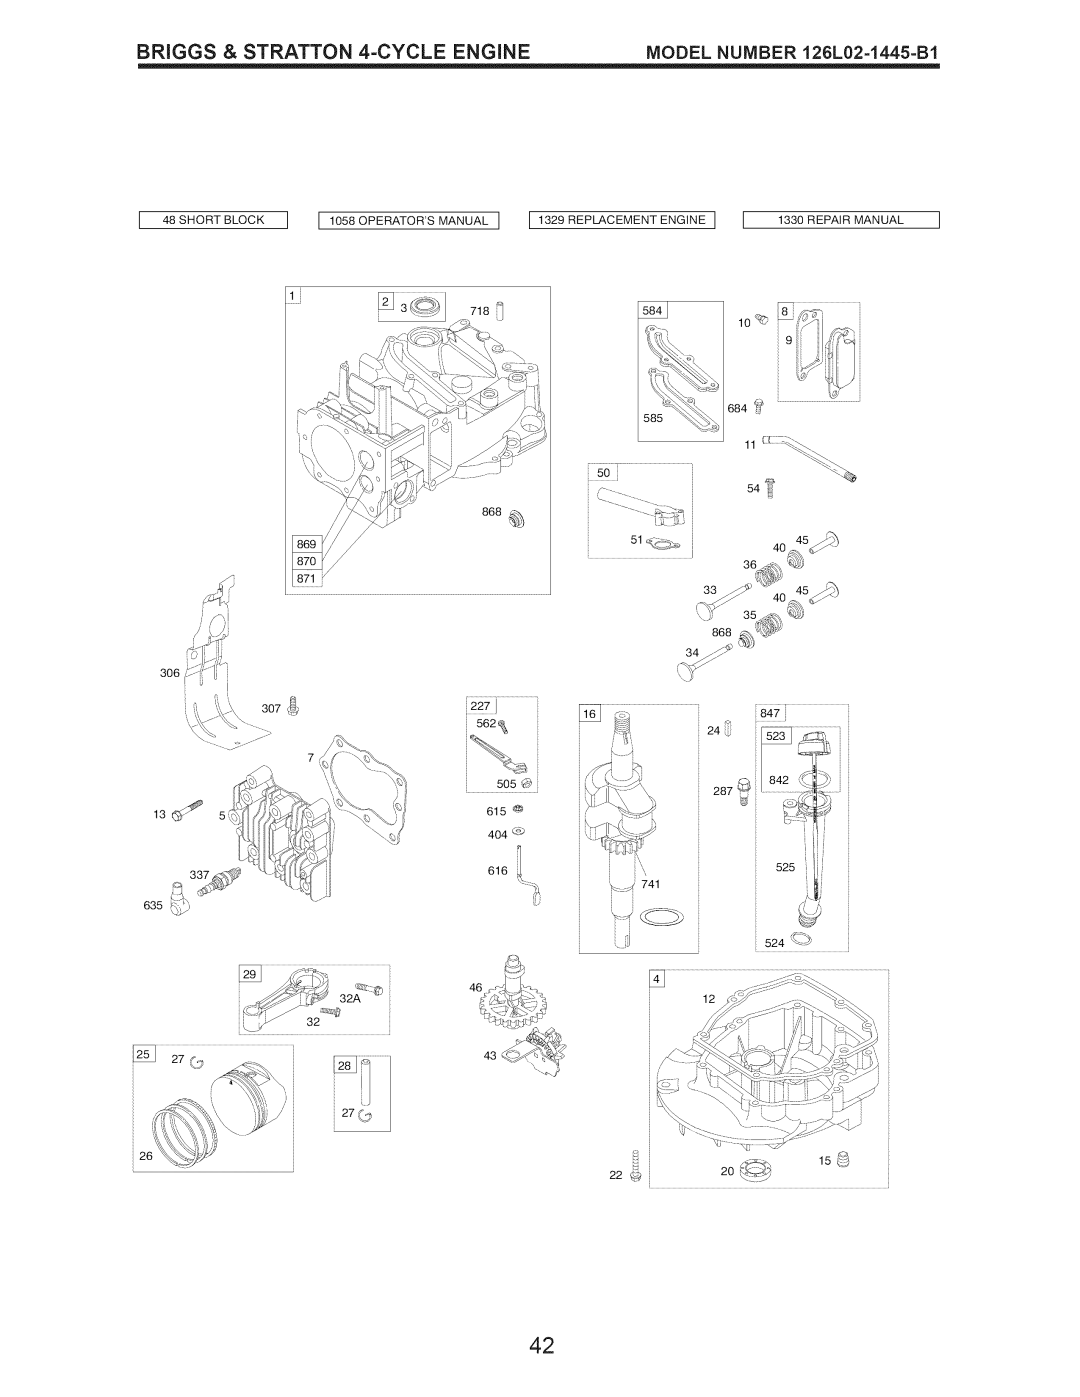 Craftsman 917.374043 owner manual BRIGGS & STRATTON 4-CYCLEENGINE, MODEL NUMBER 126L02-1445-B1 